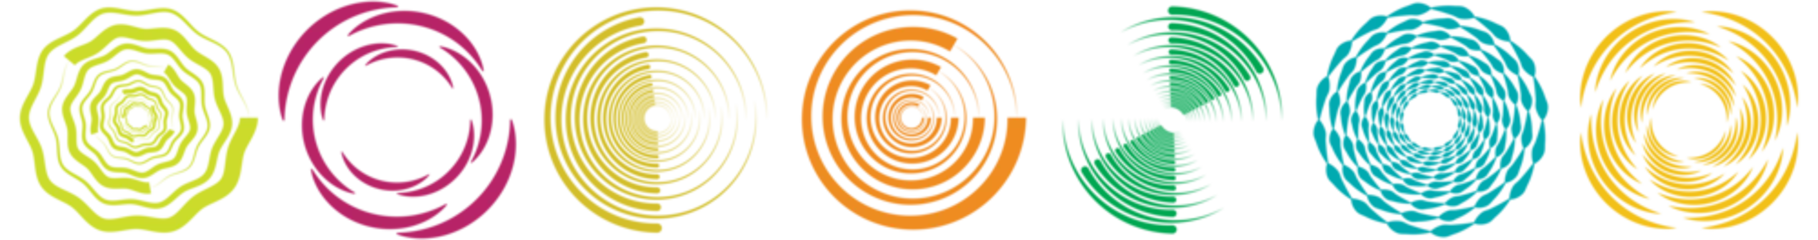 Rolgordijnen Spiral, swirl, twirl, vortex icon, shape. Concentric circles, rings. Abstract geometric shapes with rotation effect © Pixxsa